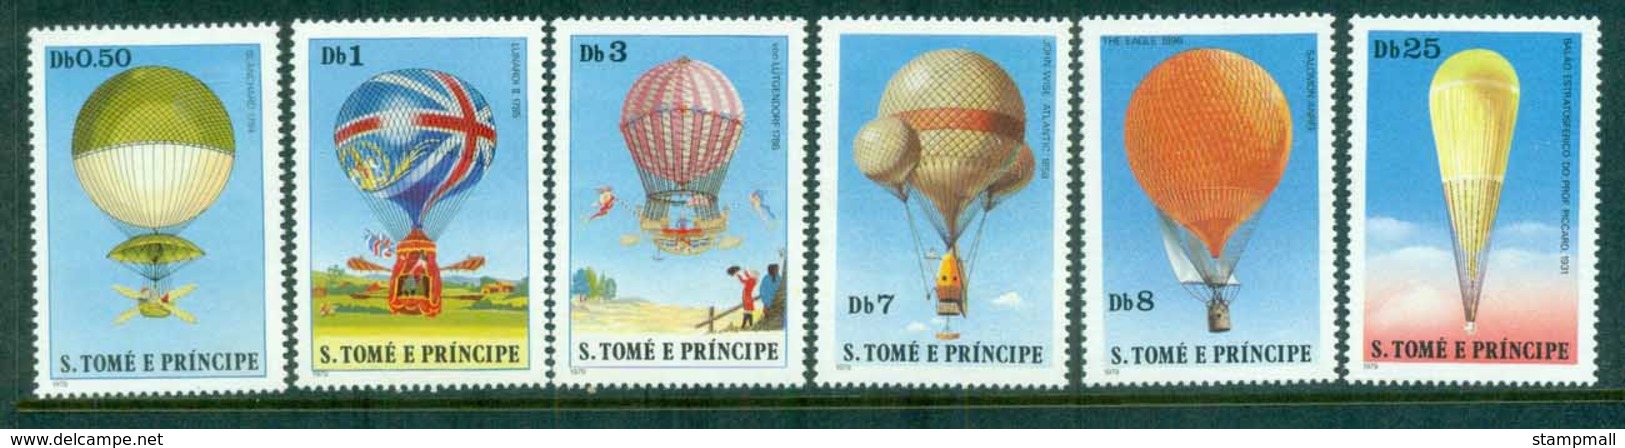 Sao Tome Et Principe 1979 Balloons MUH - Sao Tome And Principe